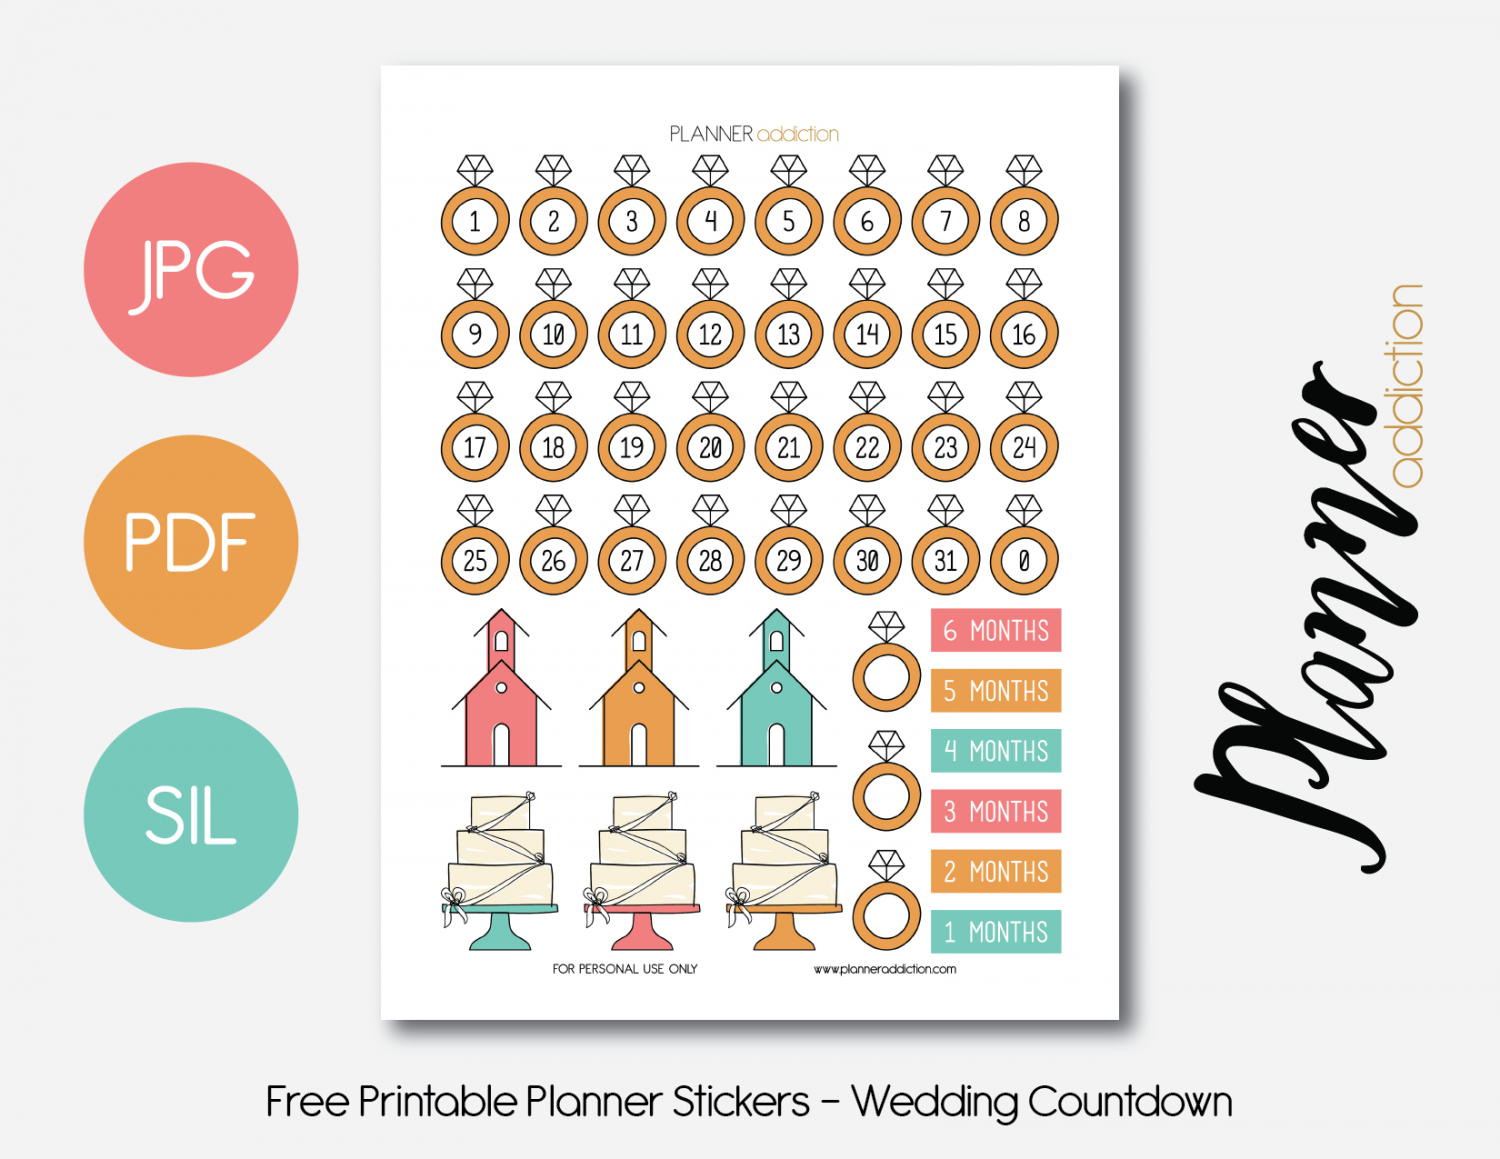 Free Printable Planner Stickers - Wedding Countdown | ♡ Wedding - Free Printable Wedding Countdown